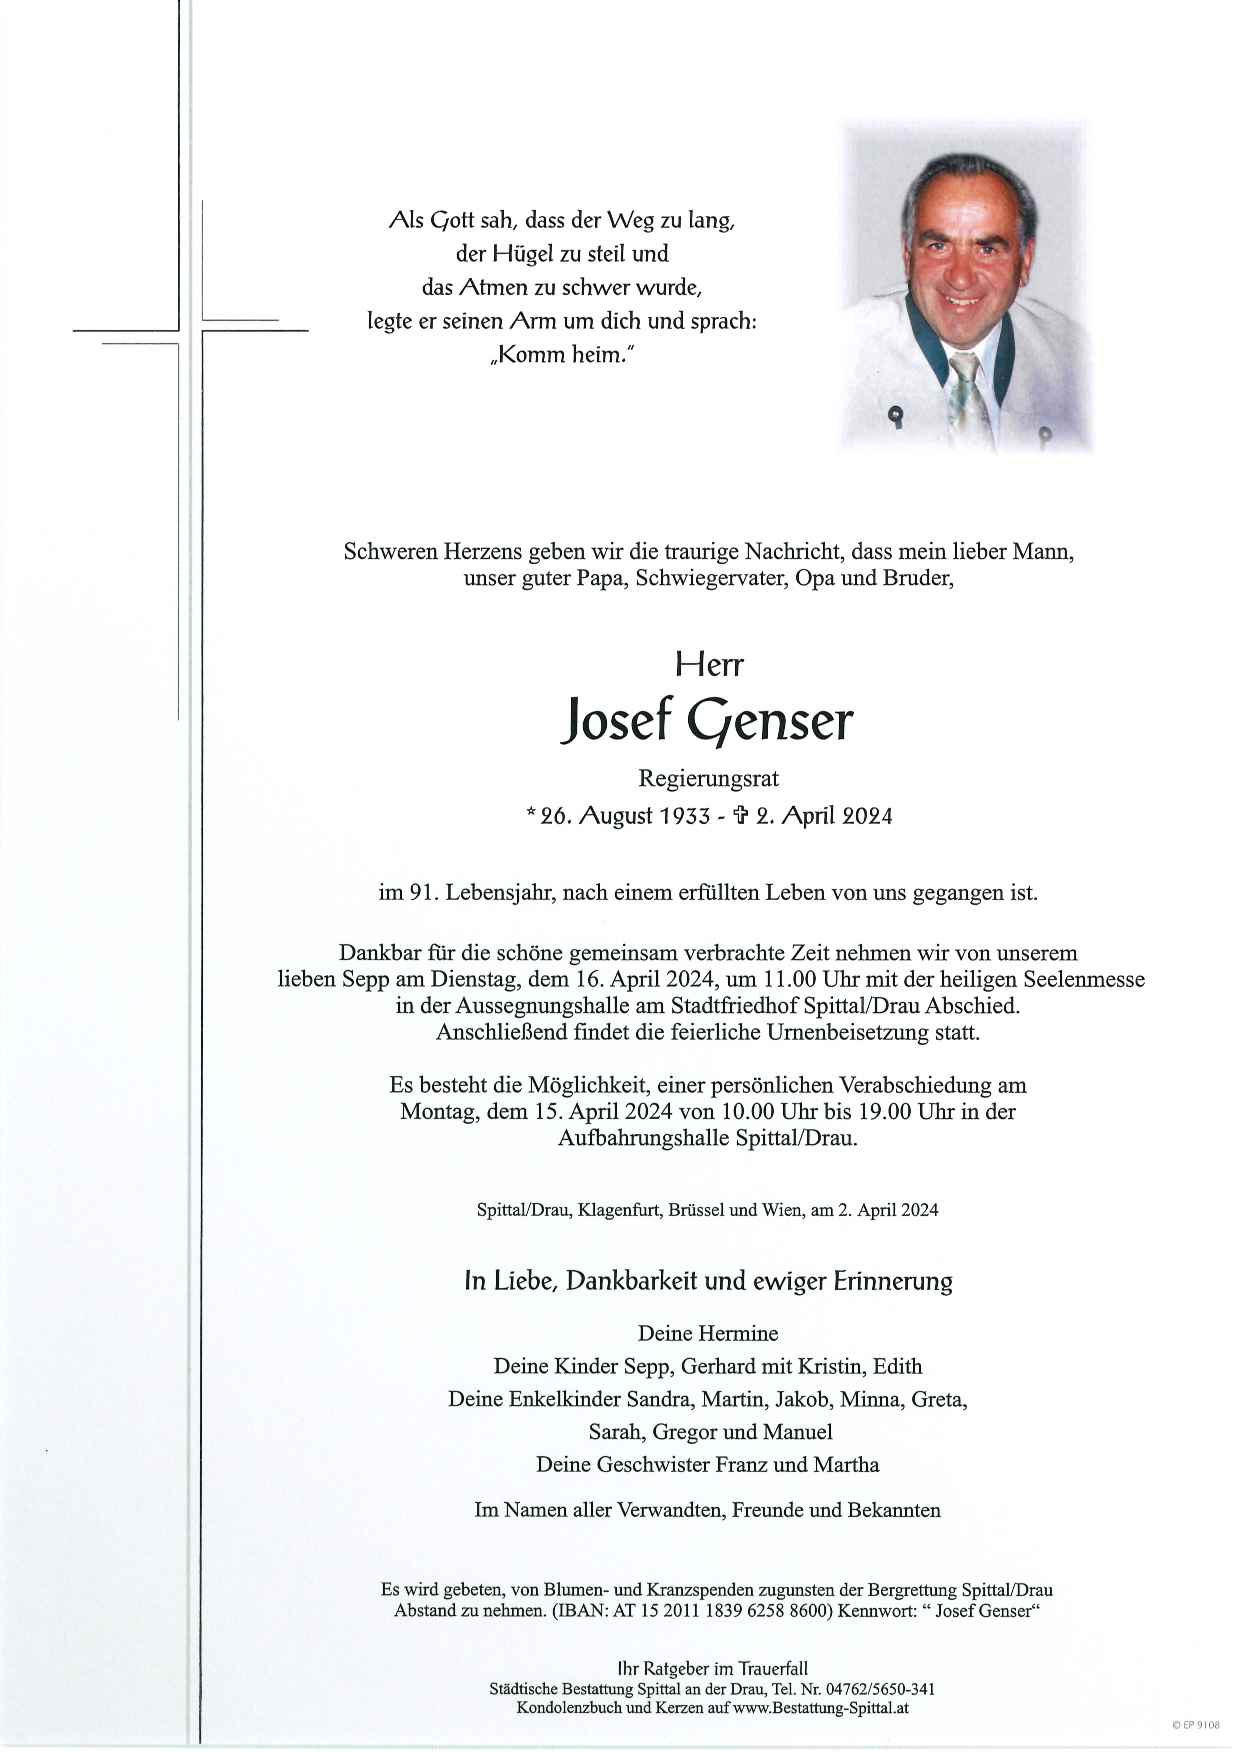 Josef Genser